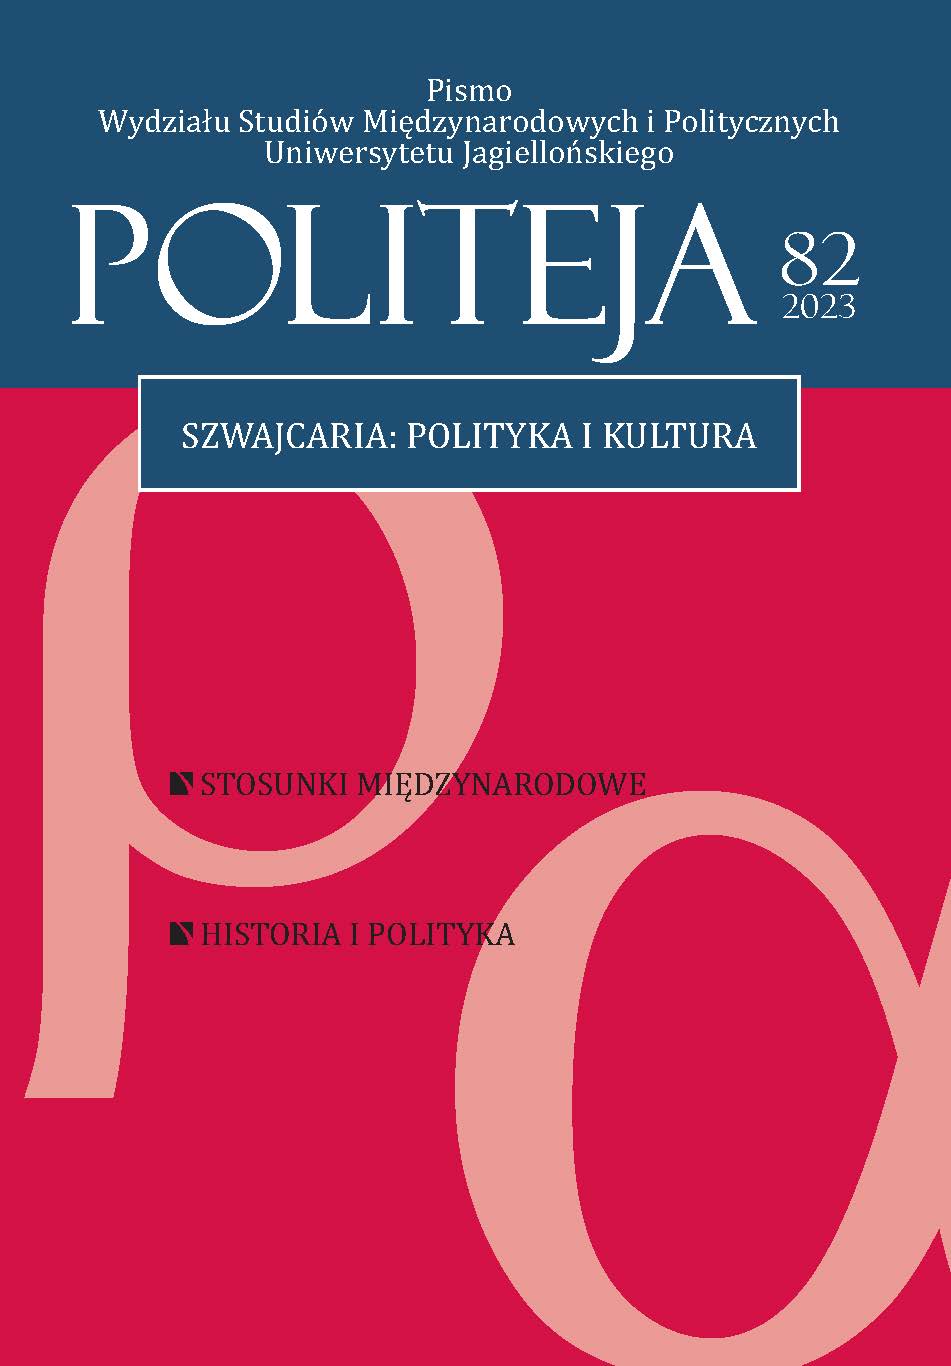 SWISS GENESIS OF ANTHROPOLOGY AND ETHNOLOGY BY JAN CZEKANOWSKI (1882-1965) AND STANISŁAW PONIATOWSKI (1884-1945) Cover Image